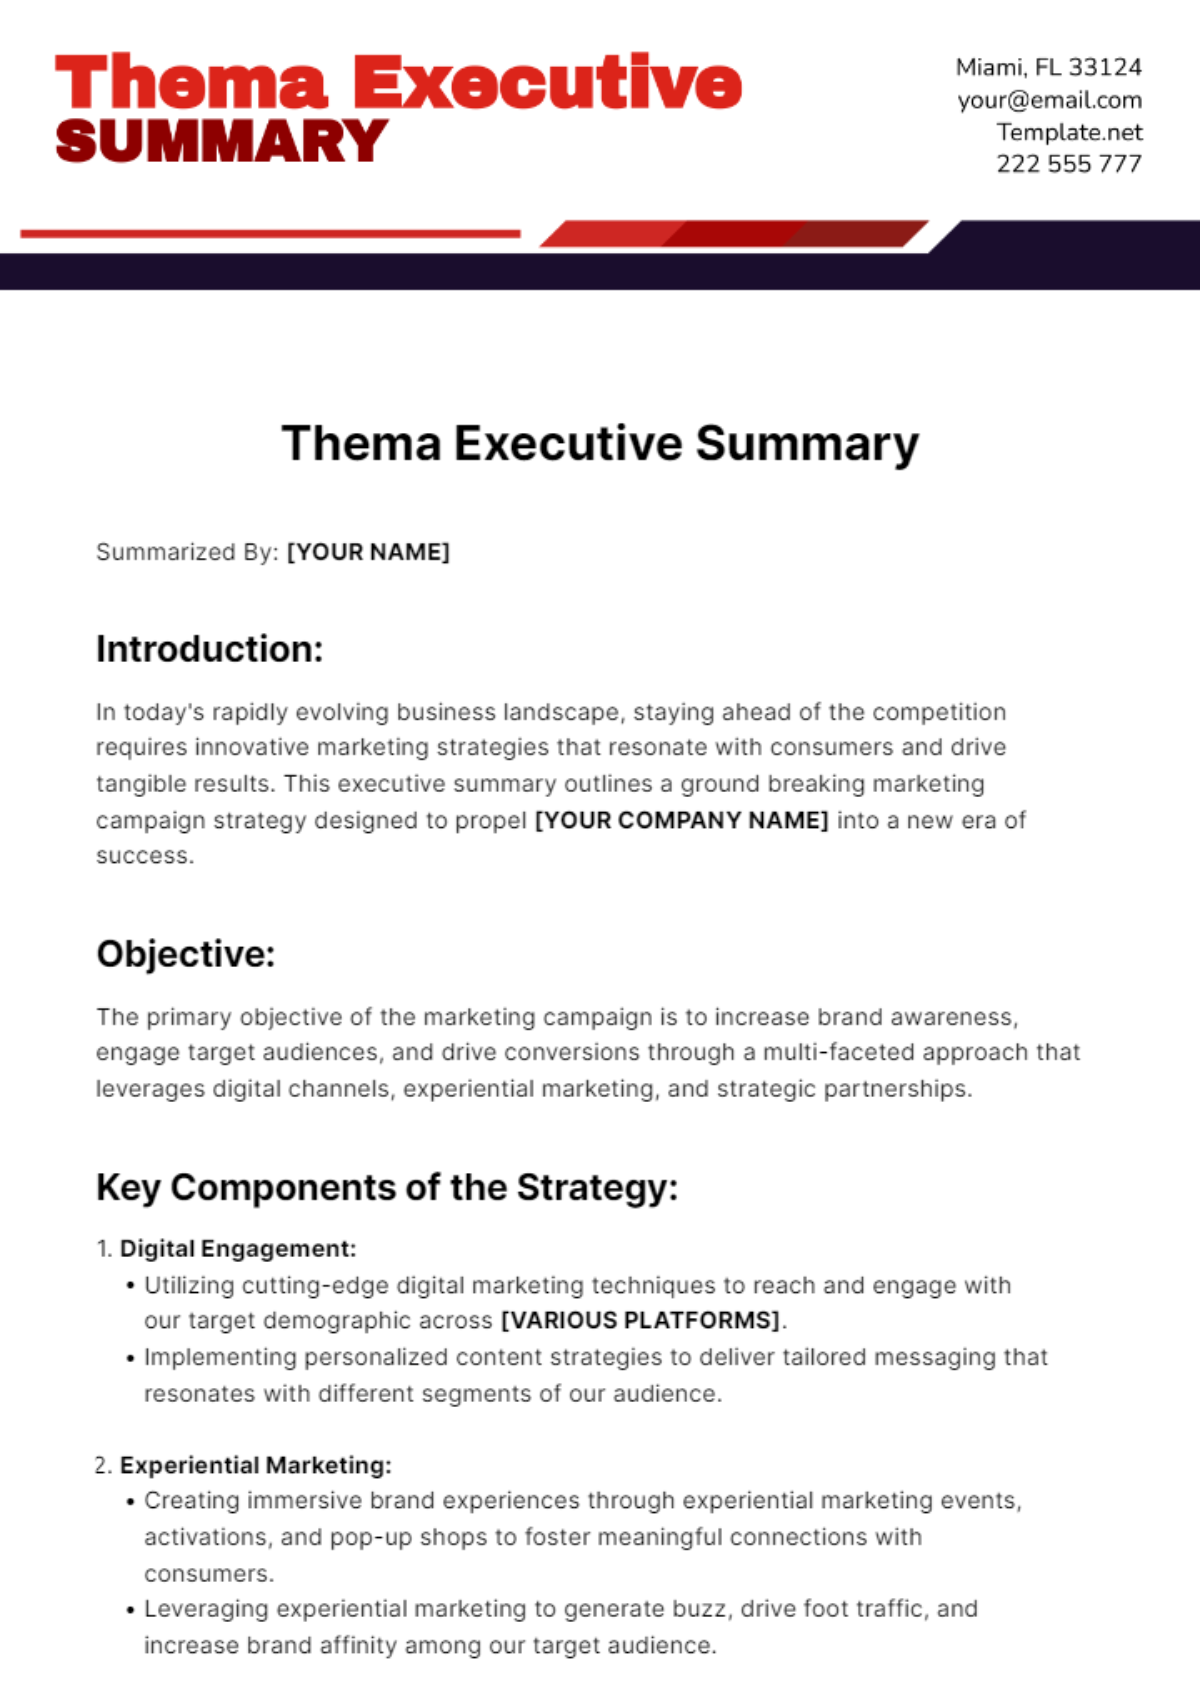 Thema Executive Summary Template